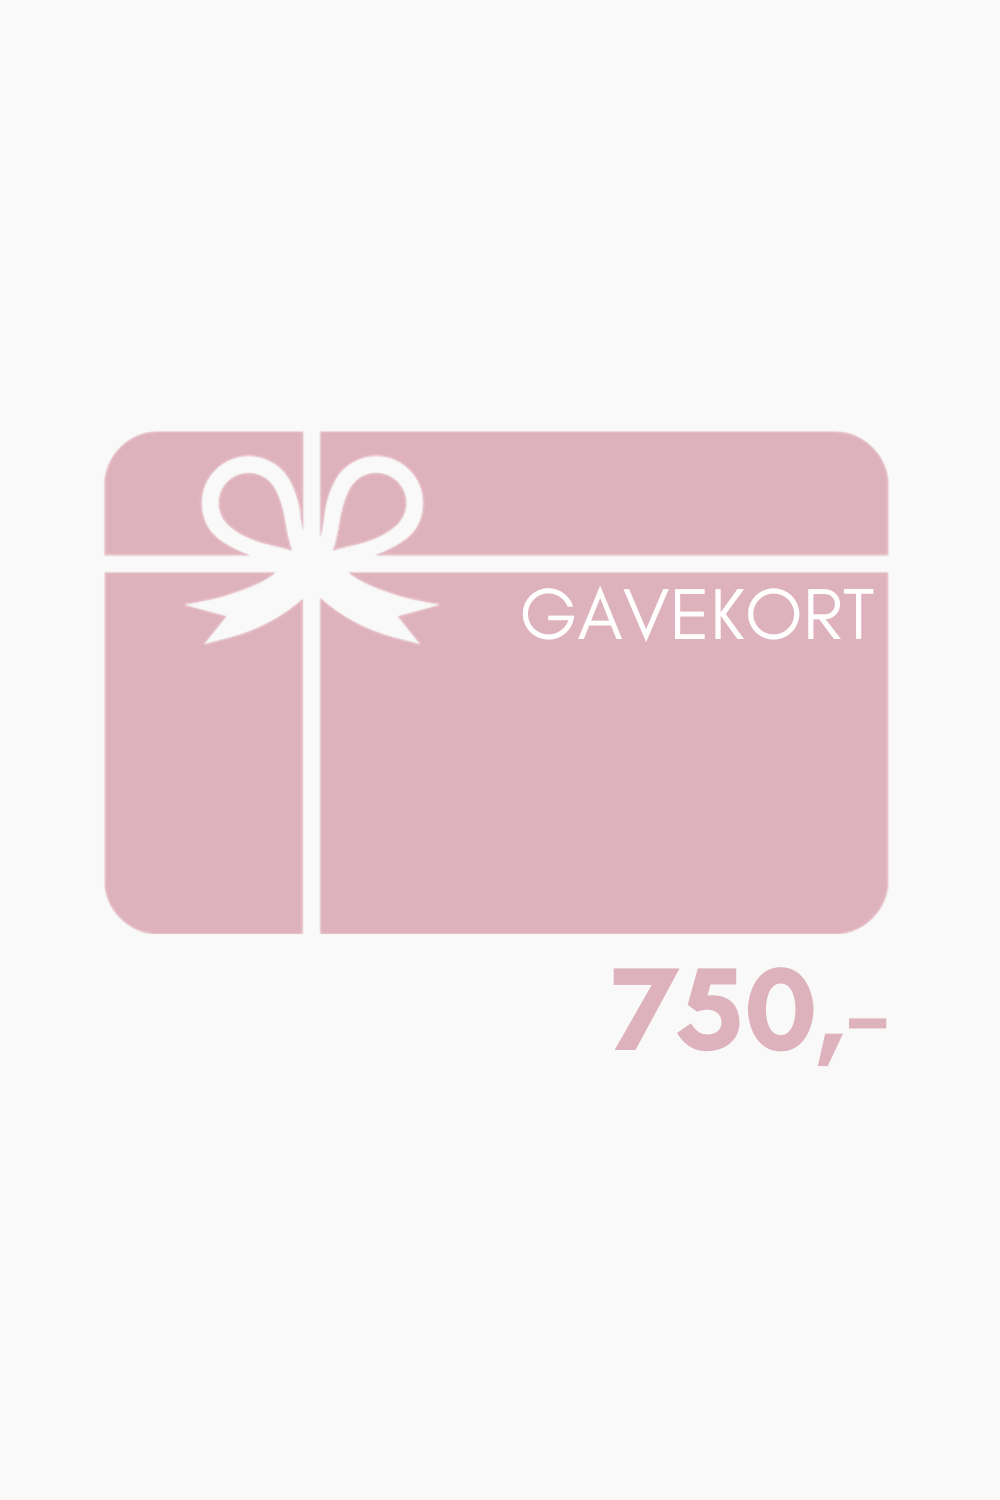 QNTS Gavekort 750 kr - 750,00 kr